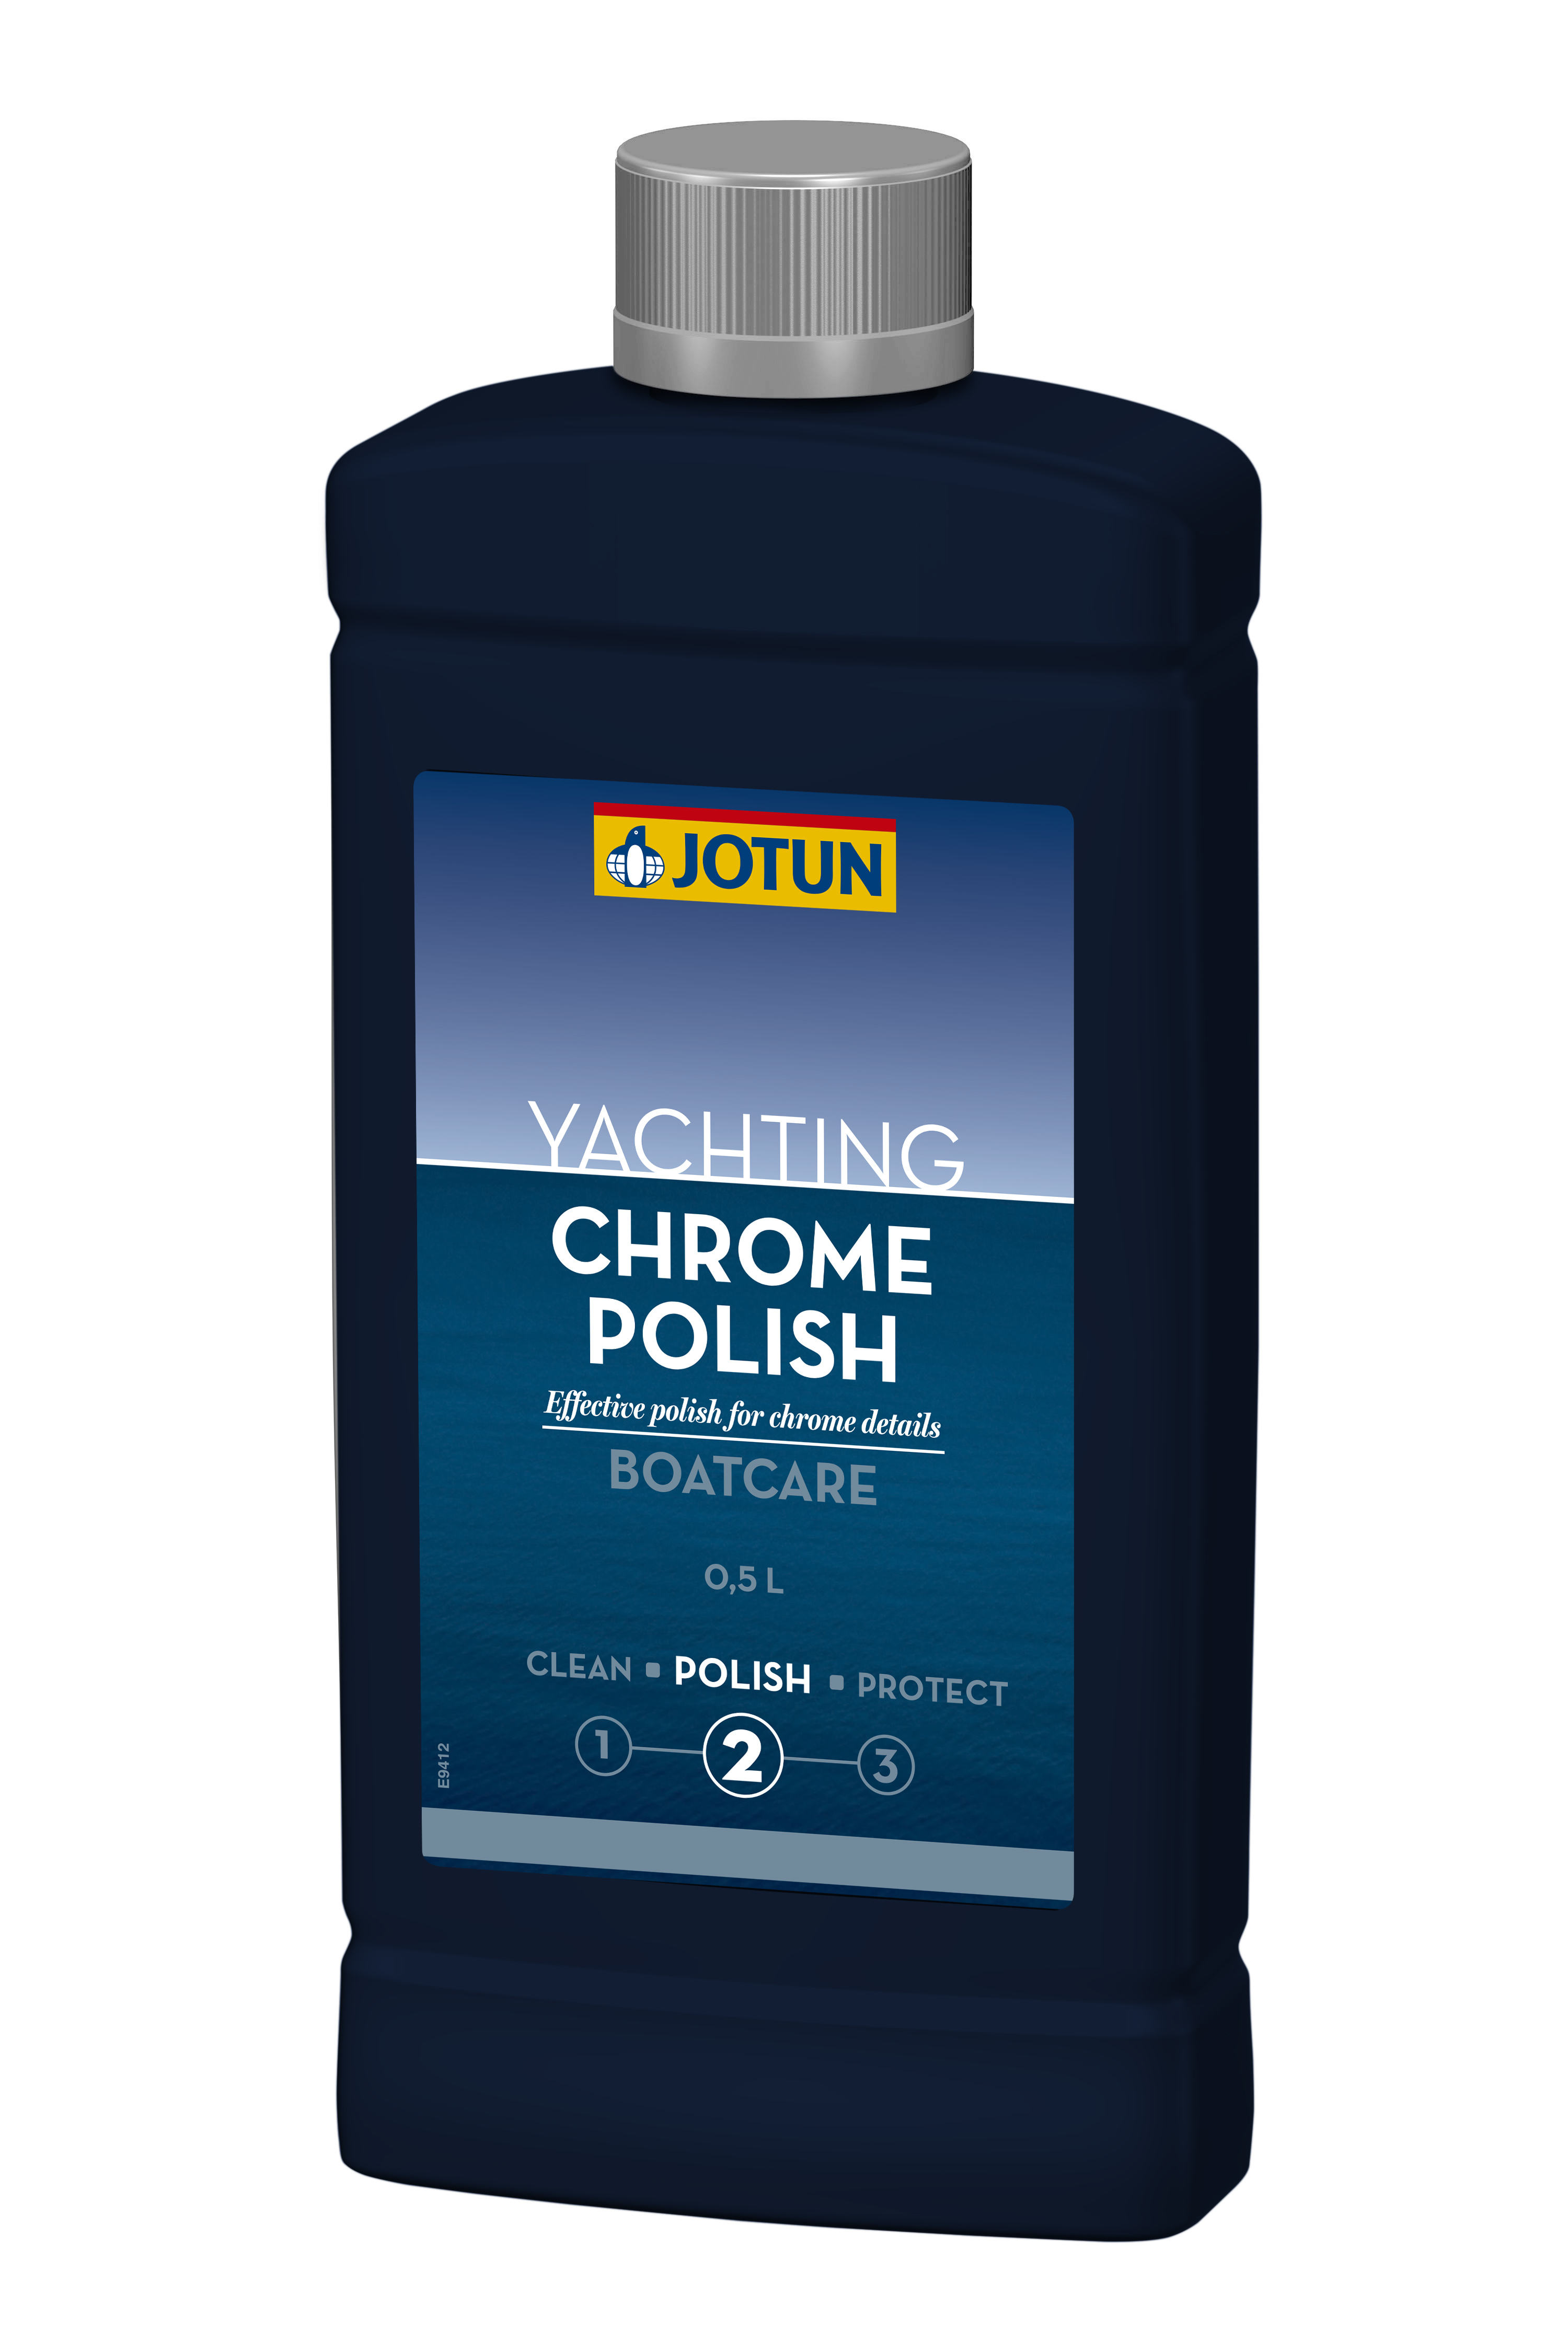 Jotun chrome polish 0.5l